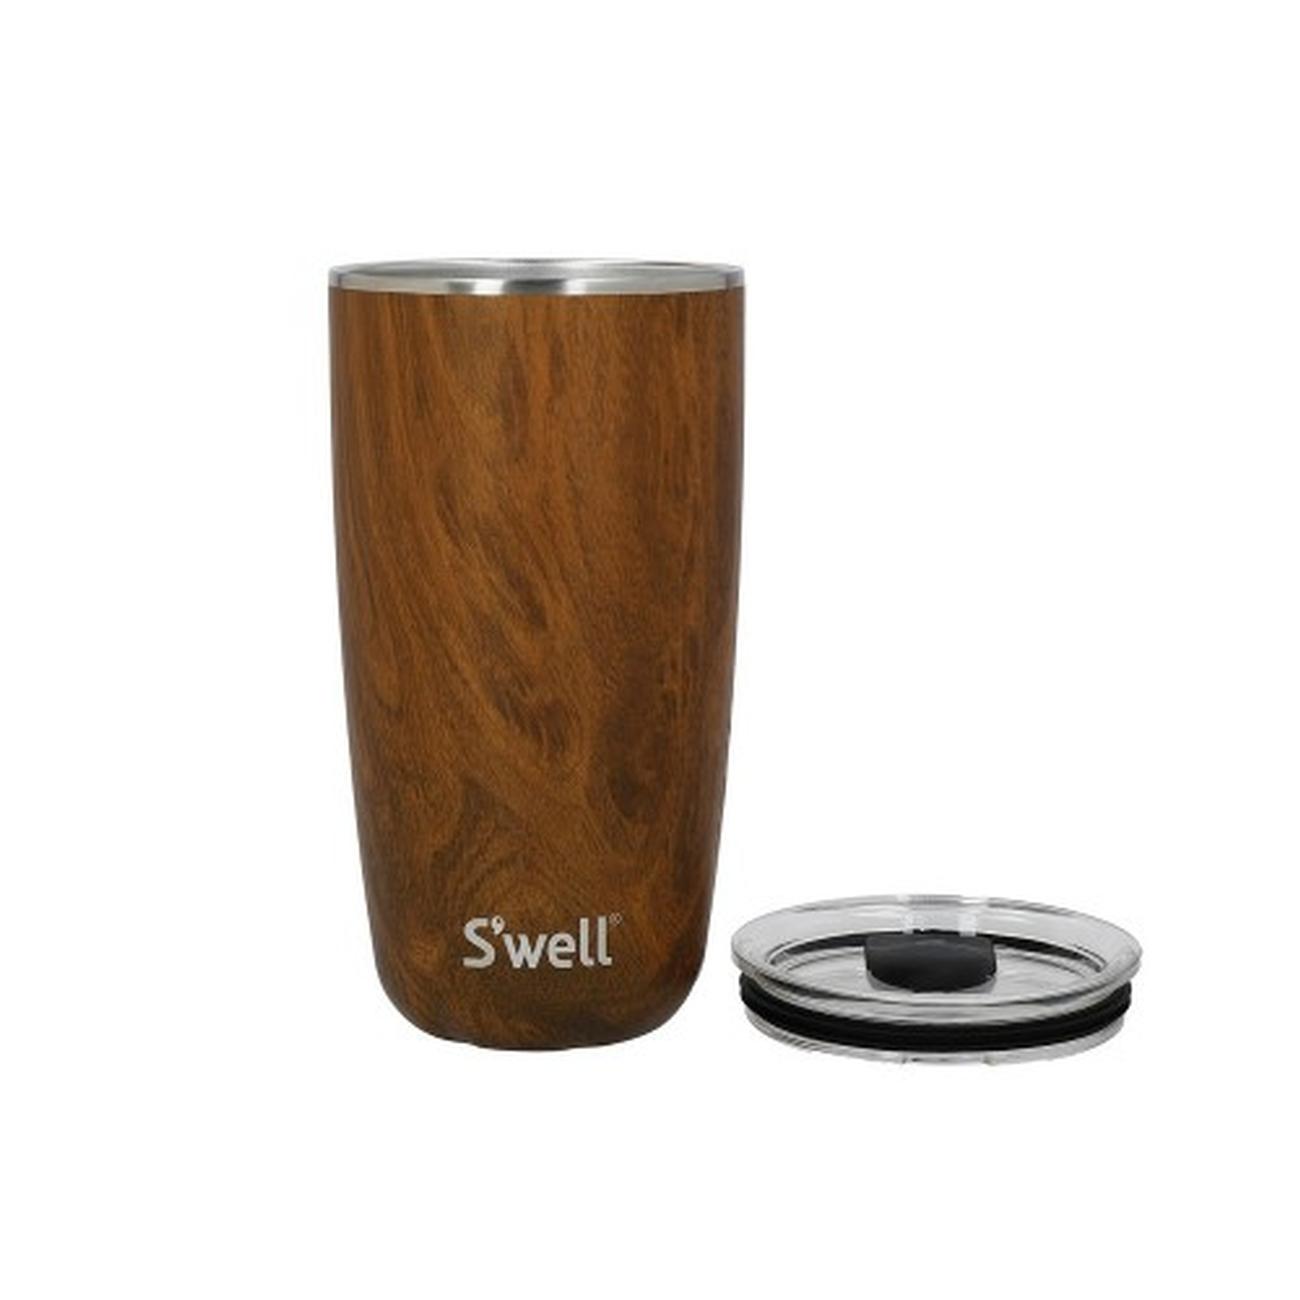 swell-teakwood-tumbler-with-lid-530ml - S'well Teakwood Tumbler with Lid 530ml